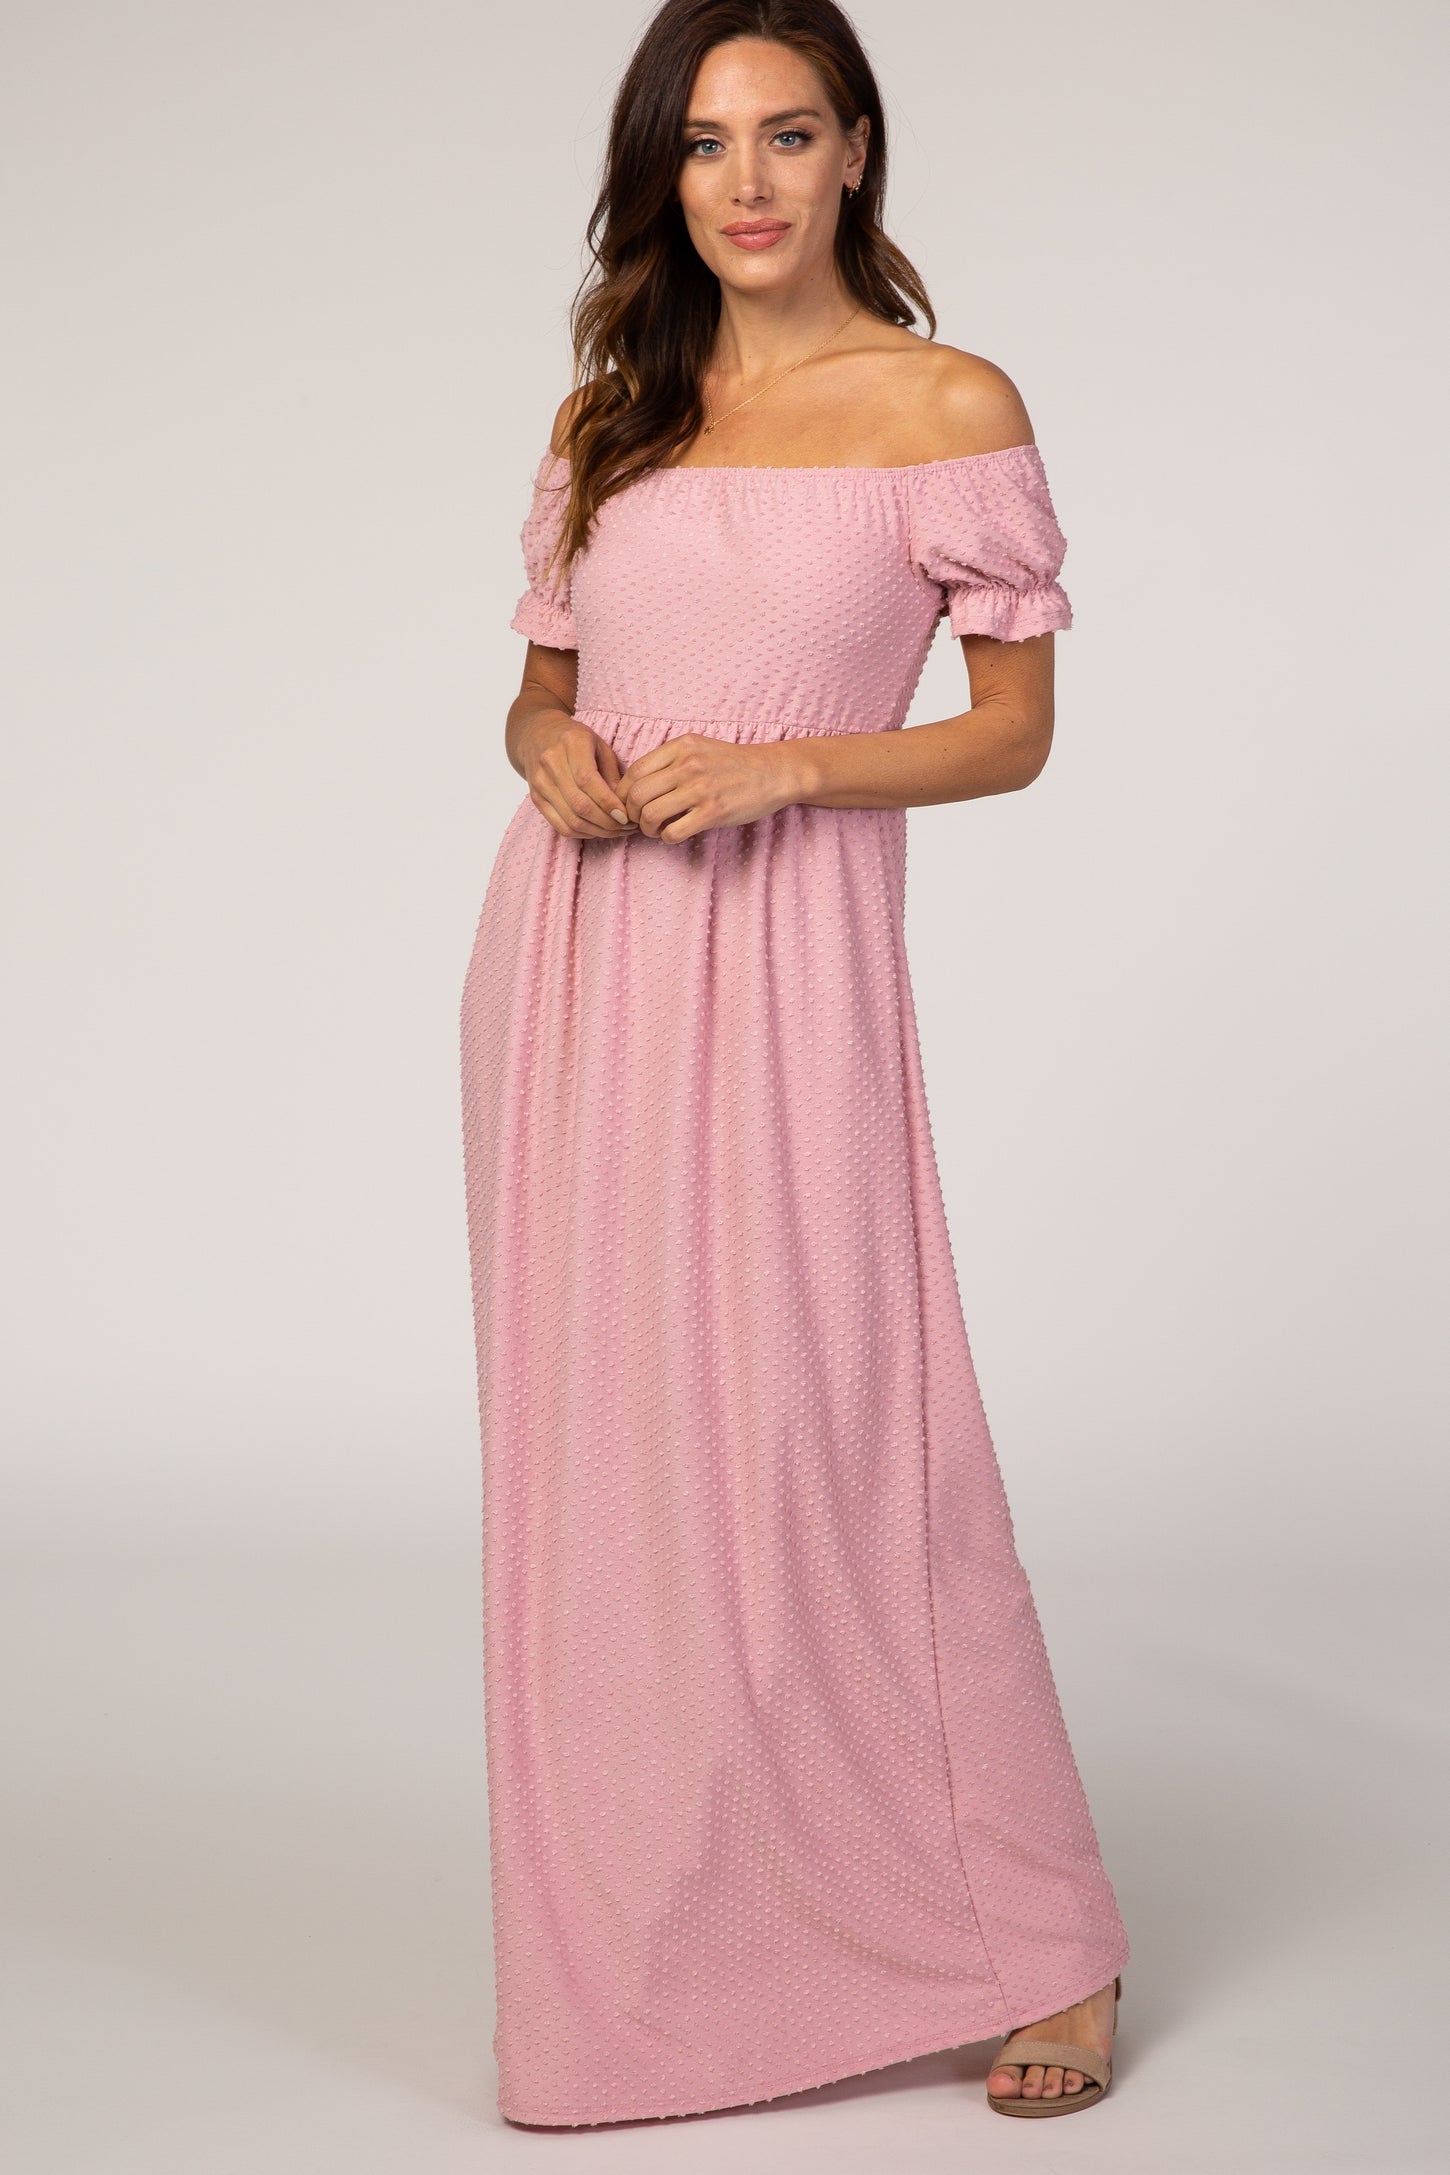 PinkBlush Mauve Off Shoulder Textured Polka Dot Short Sleeve Maxi Dress